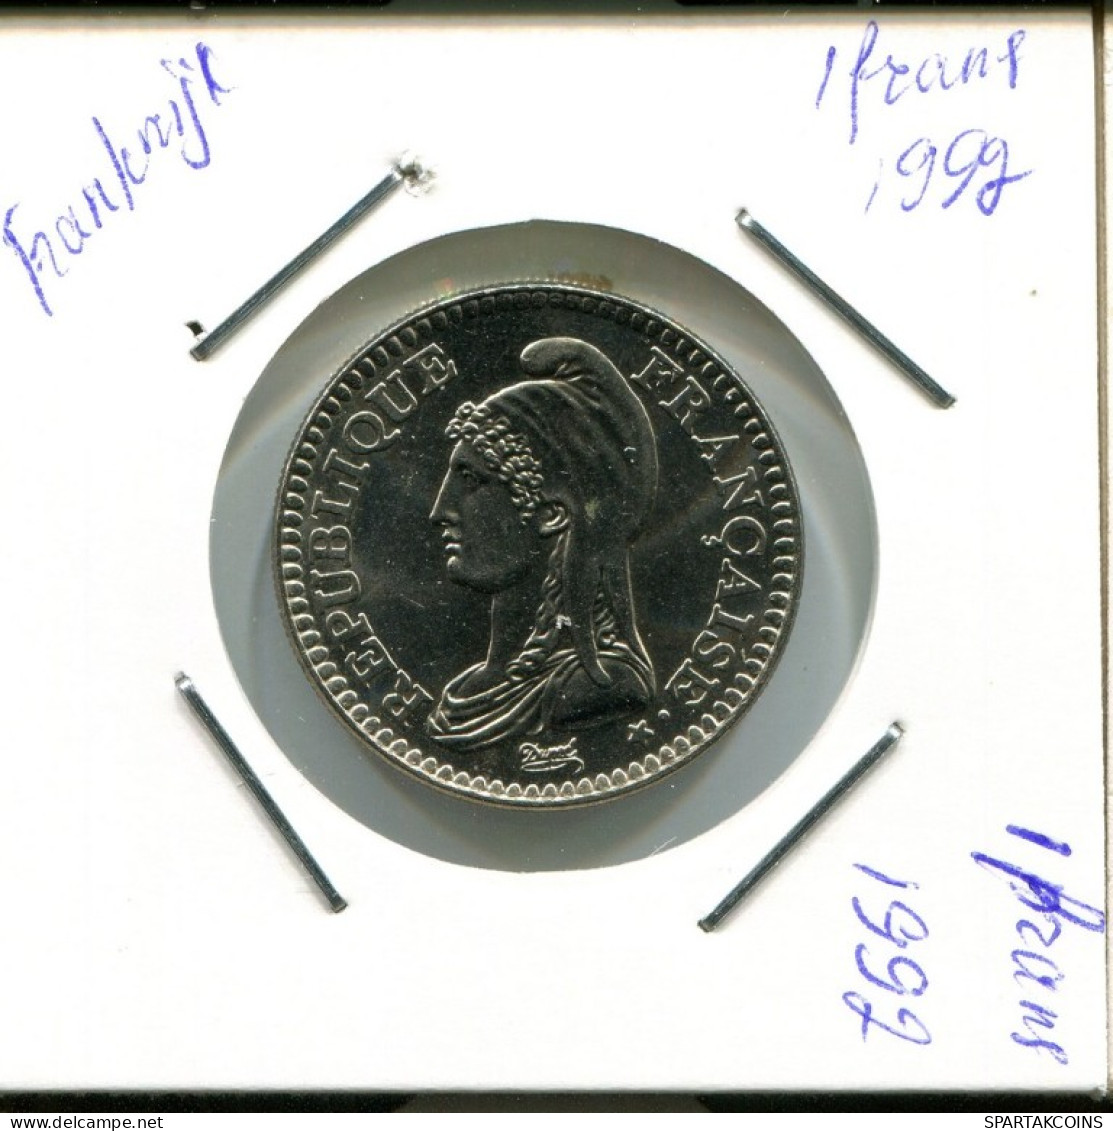 1 FRANC 1992 FRANCE Coin French Coin #AN978.U.A - 1 Franc